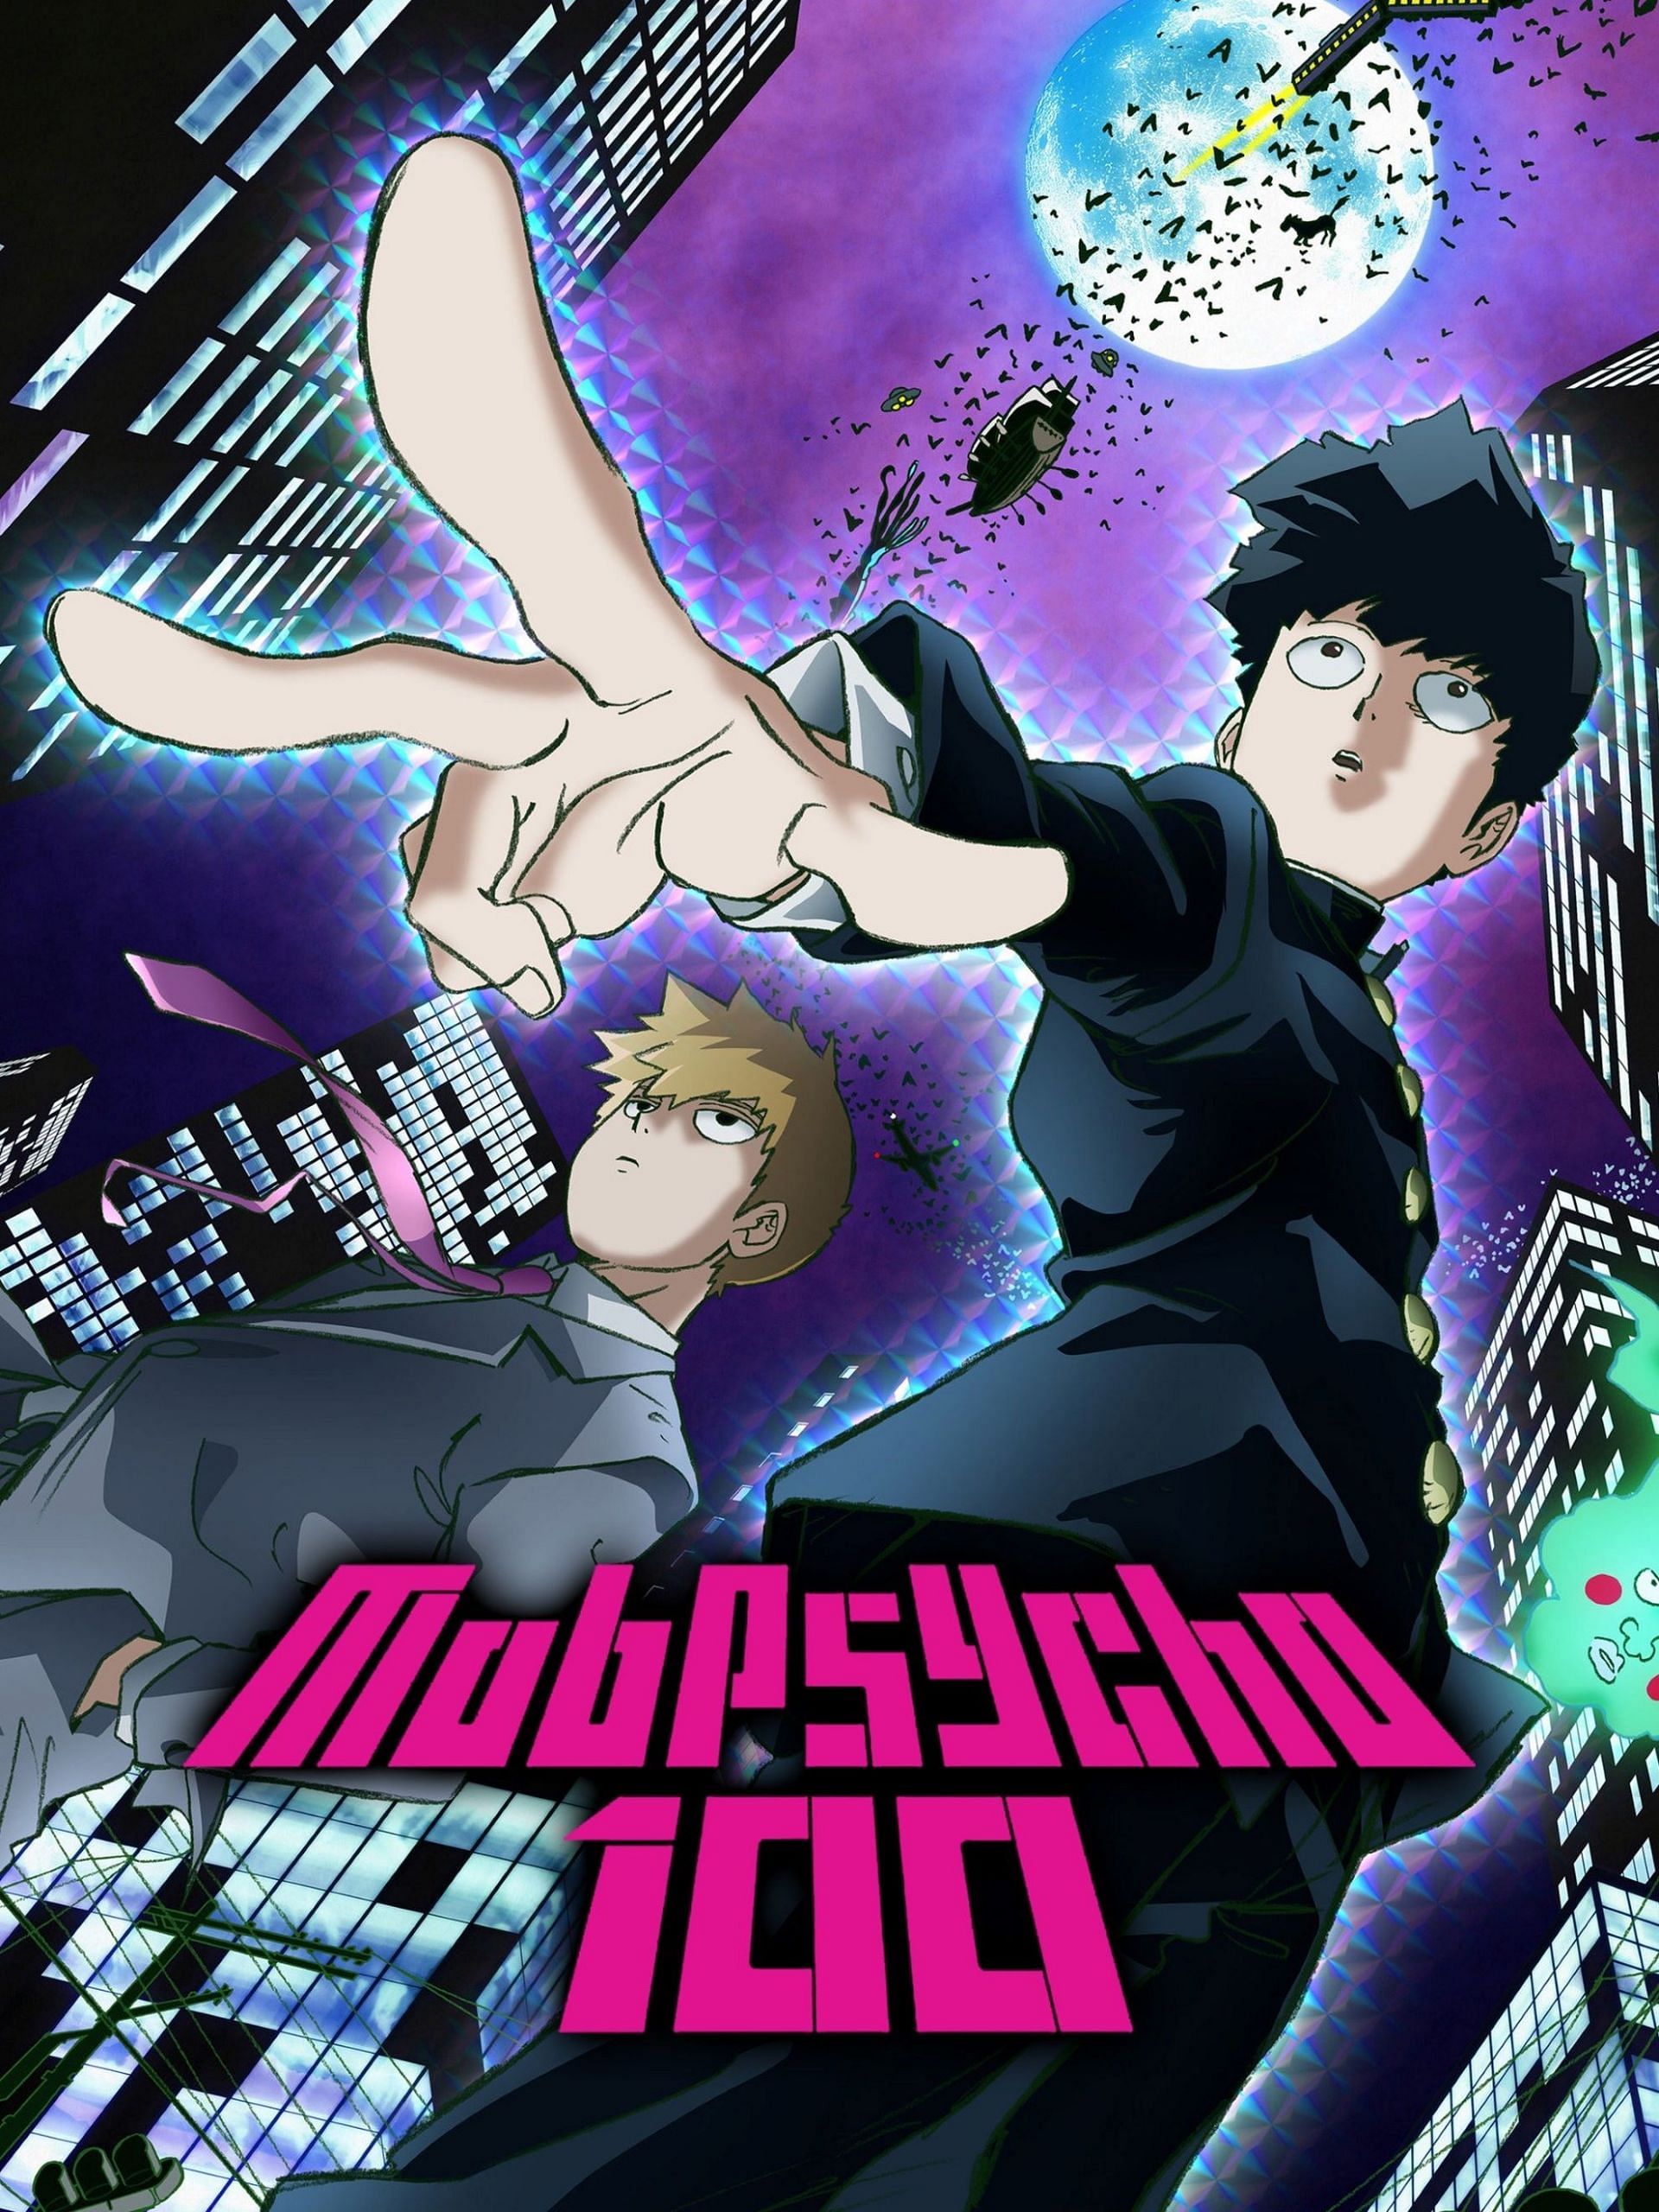 Mob Psycho 100 is a fan-favorite manga anime series (Image via Studio Bones)